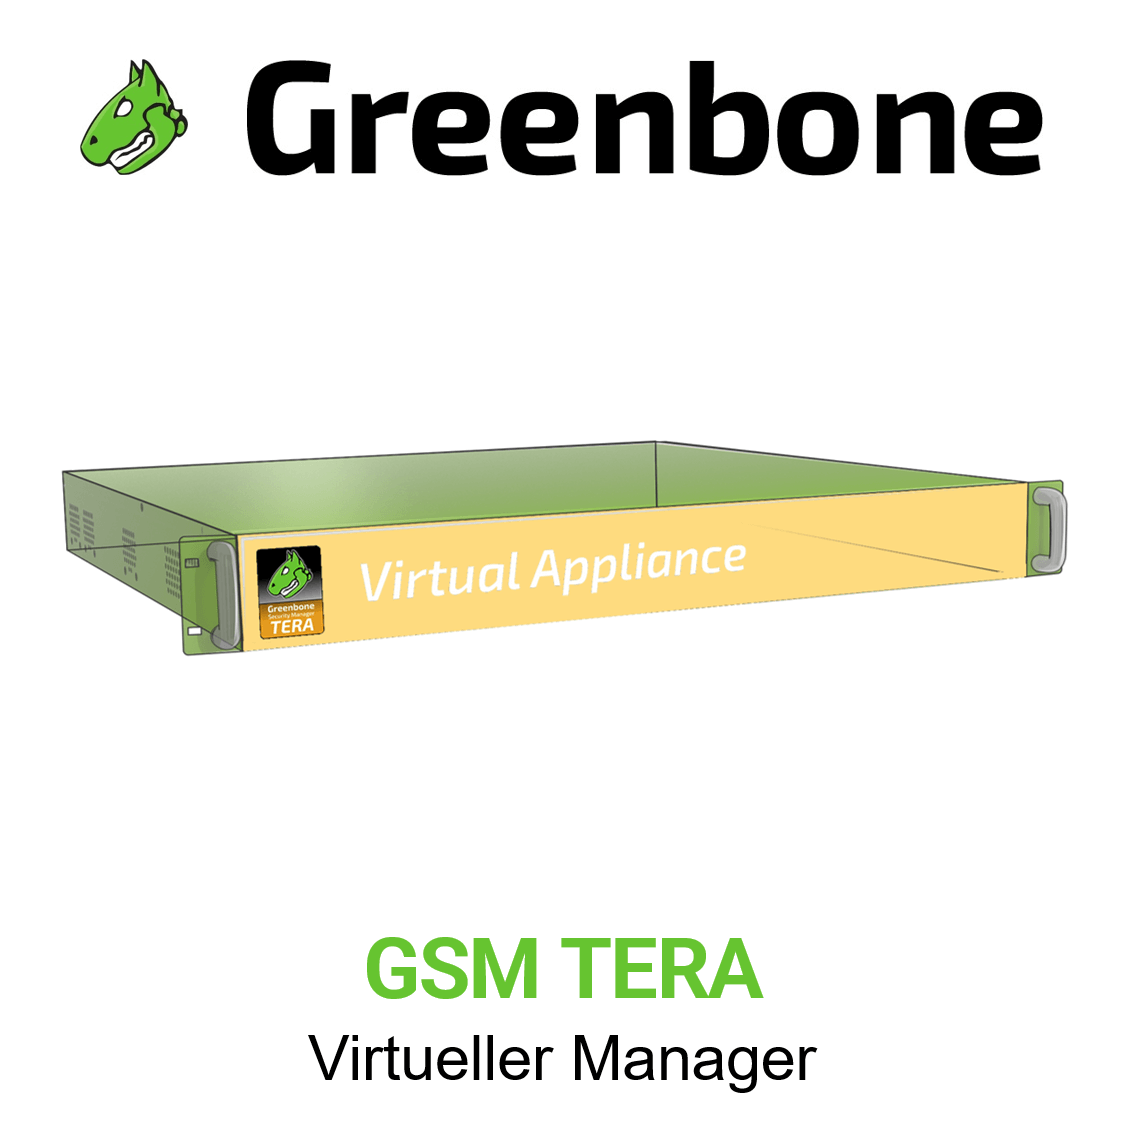 Greenbone Enterprise GSM TERA Virtuelle Appliance